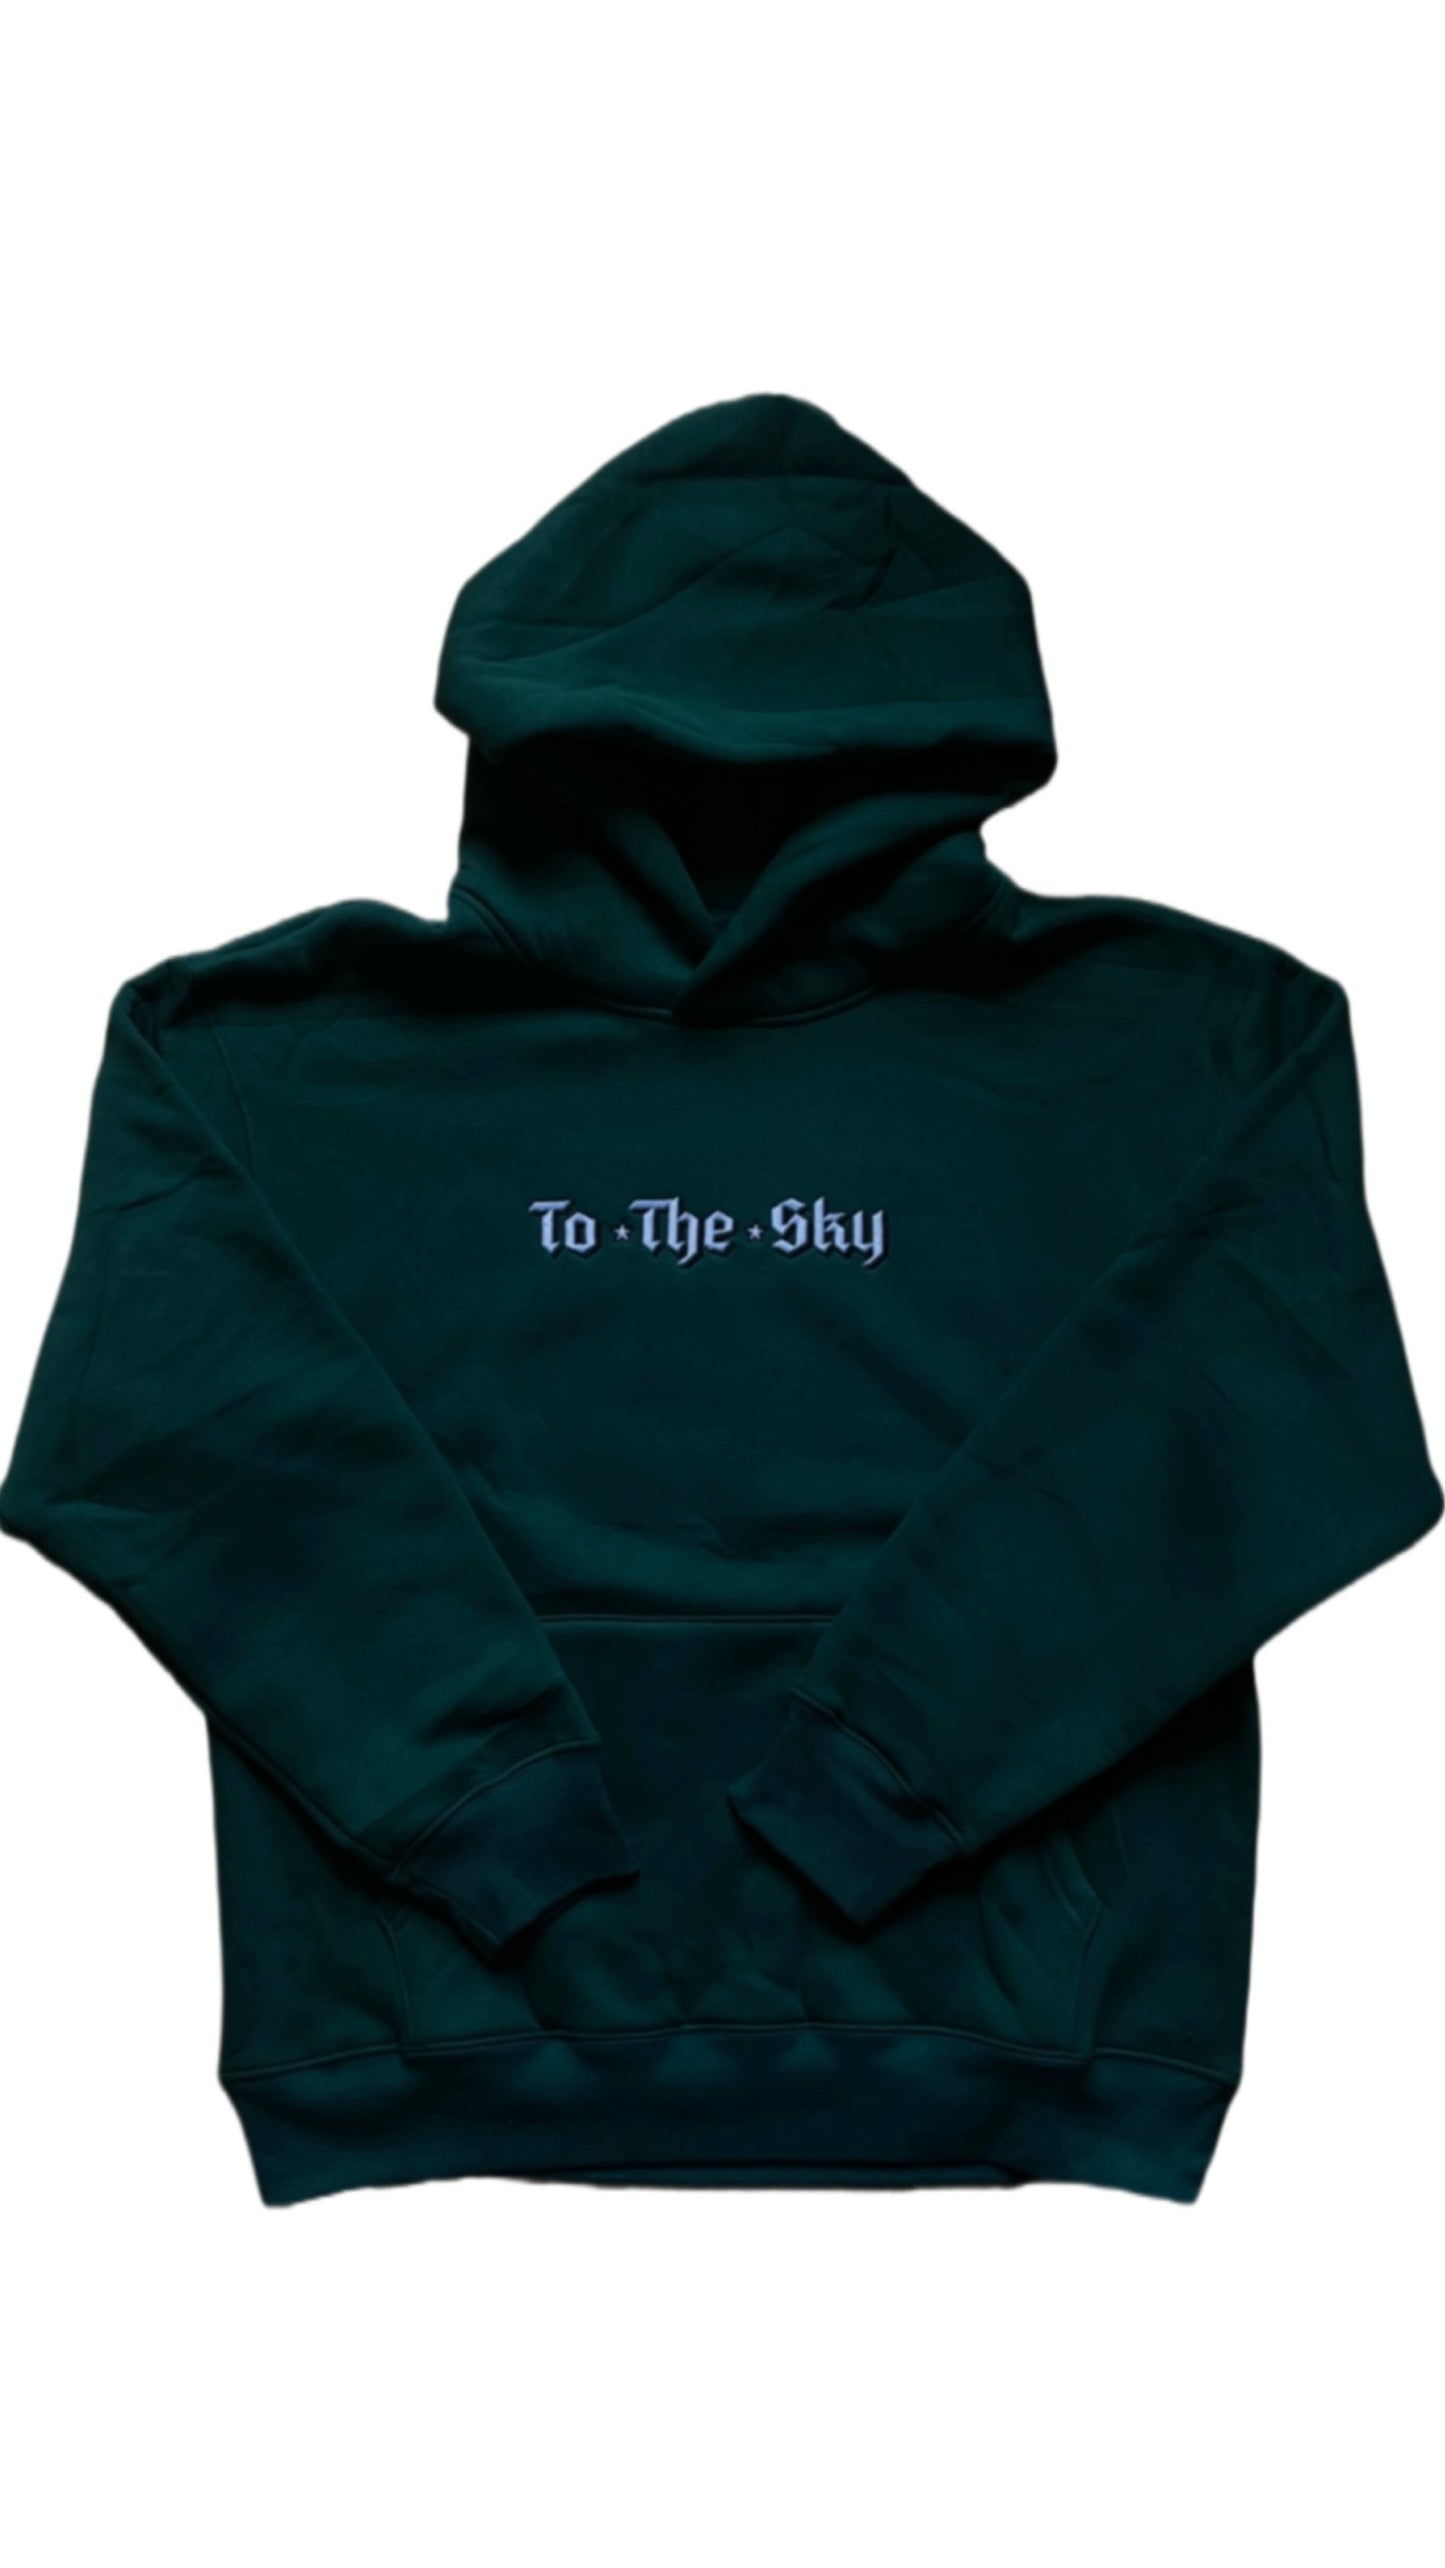 “To The Sky” heavyweight hoodie - Dark green